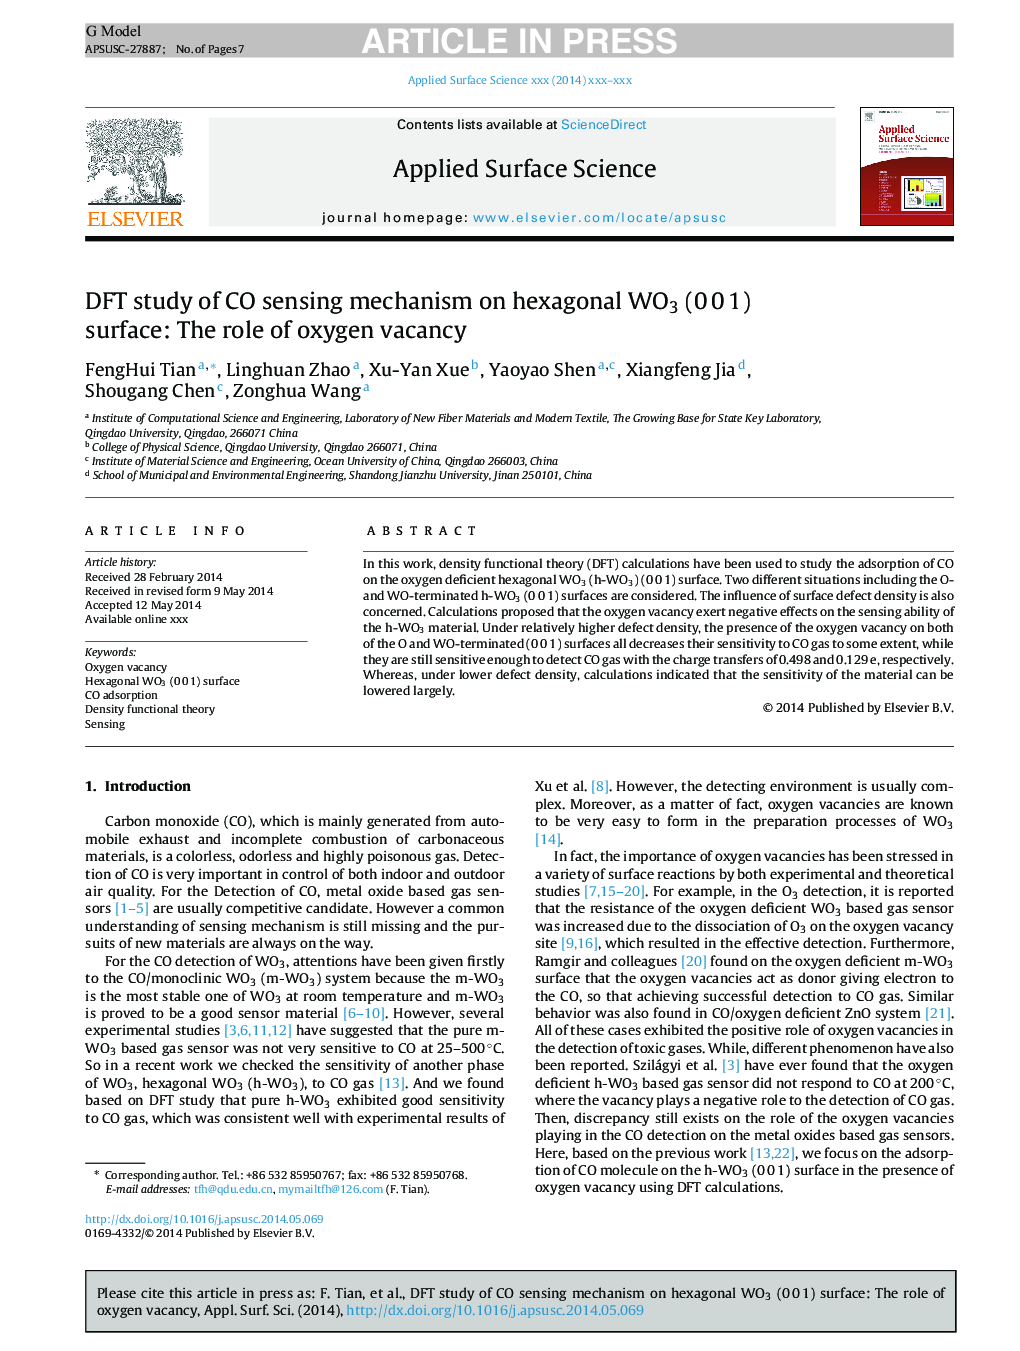 DFT study of CO sensing mechanism on hexagonal WO3 (0Â 0Â 1) surface: The role of oxygen vacancy